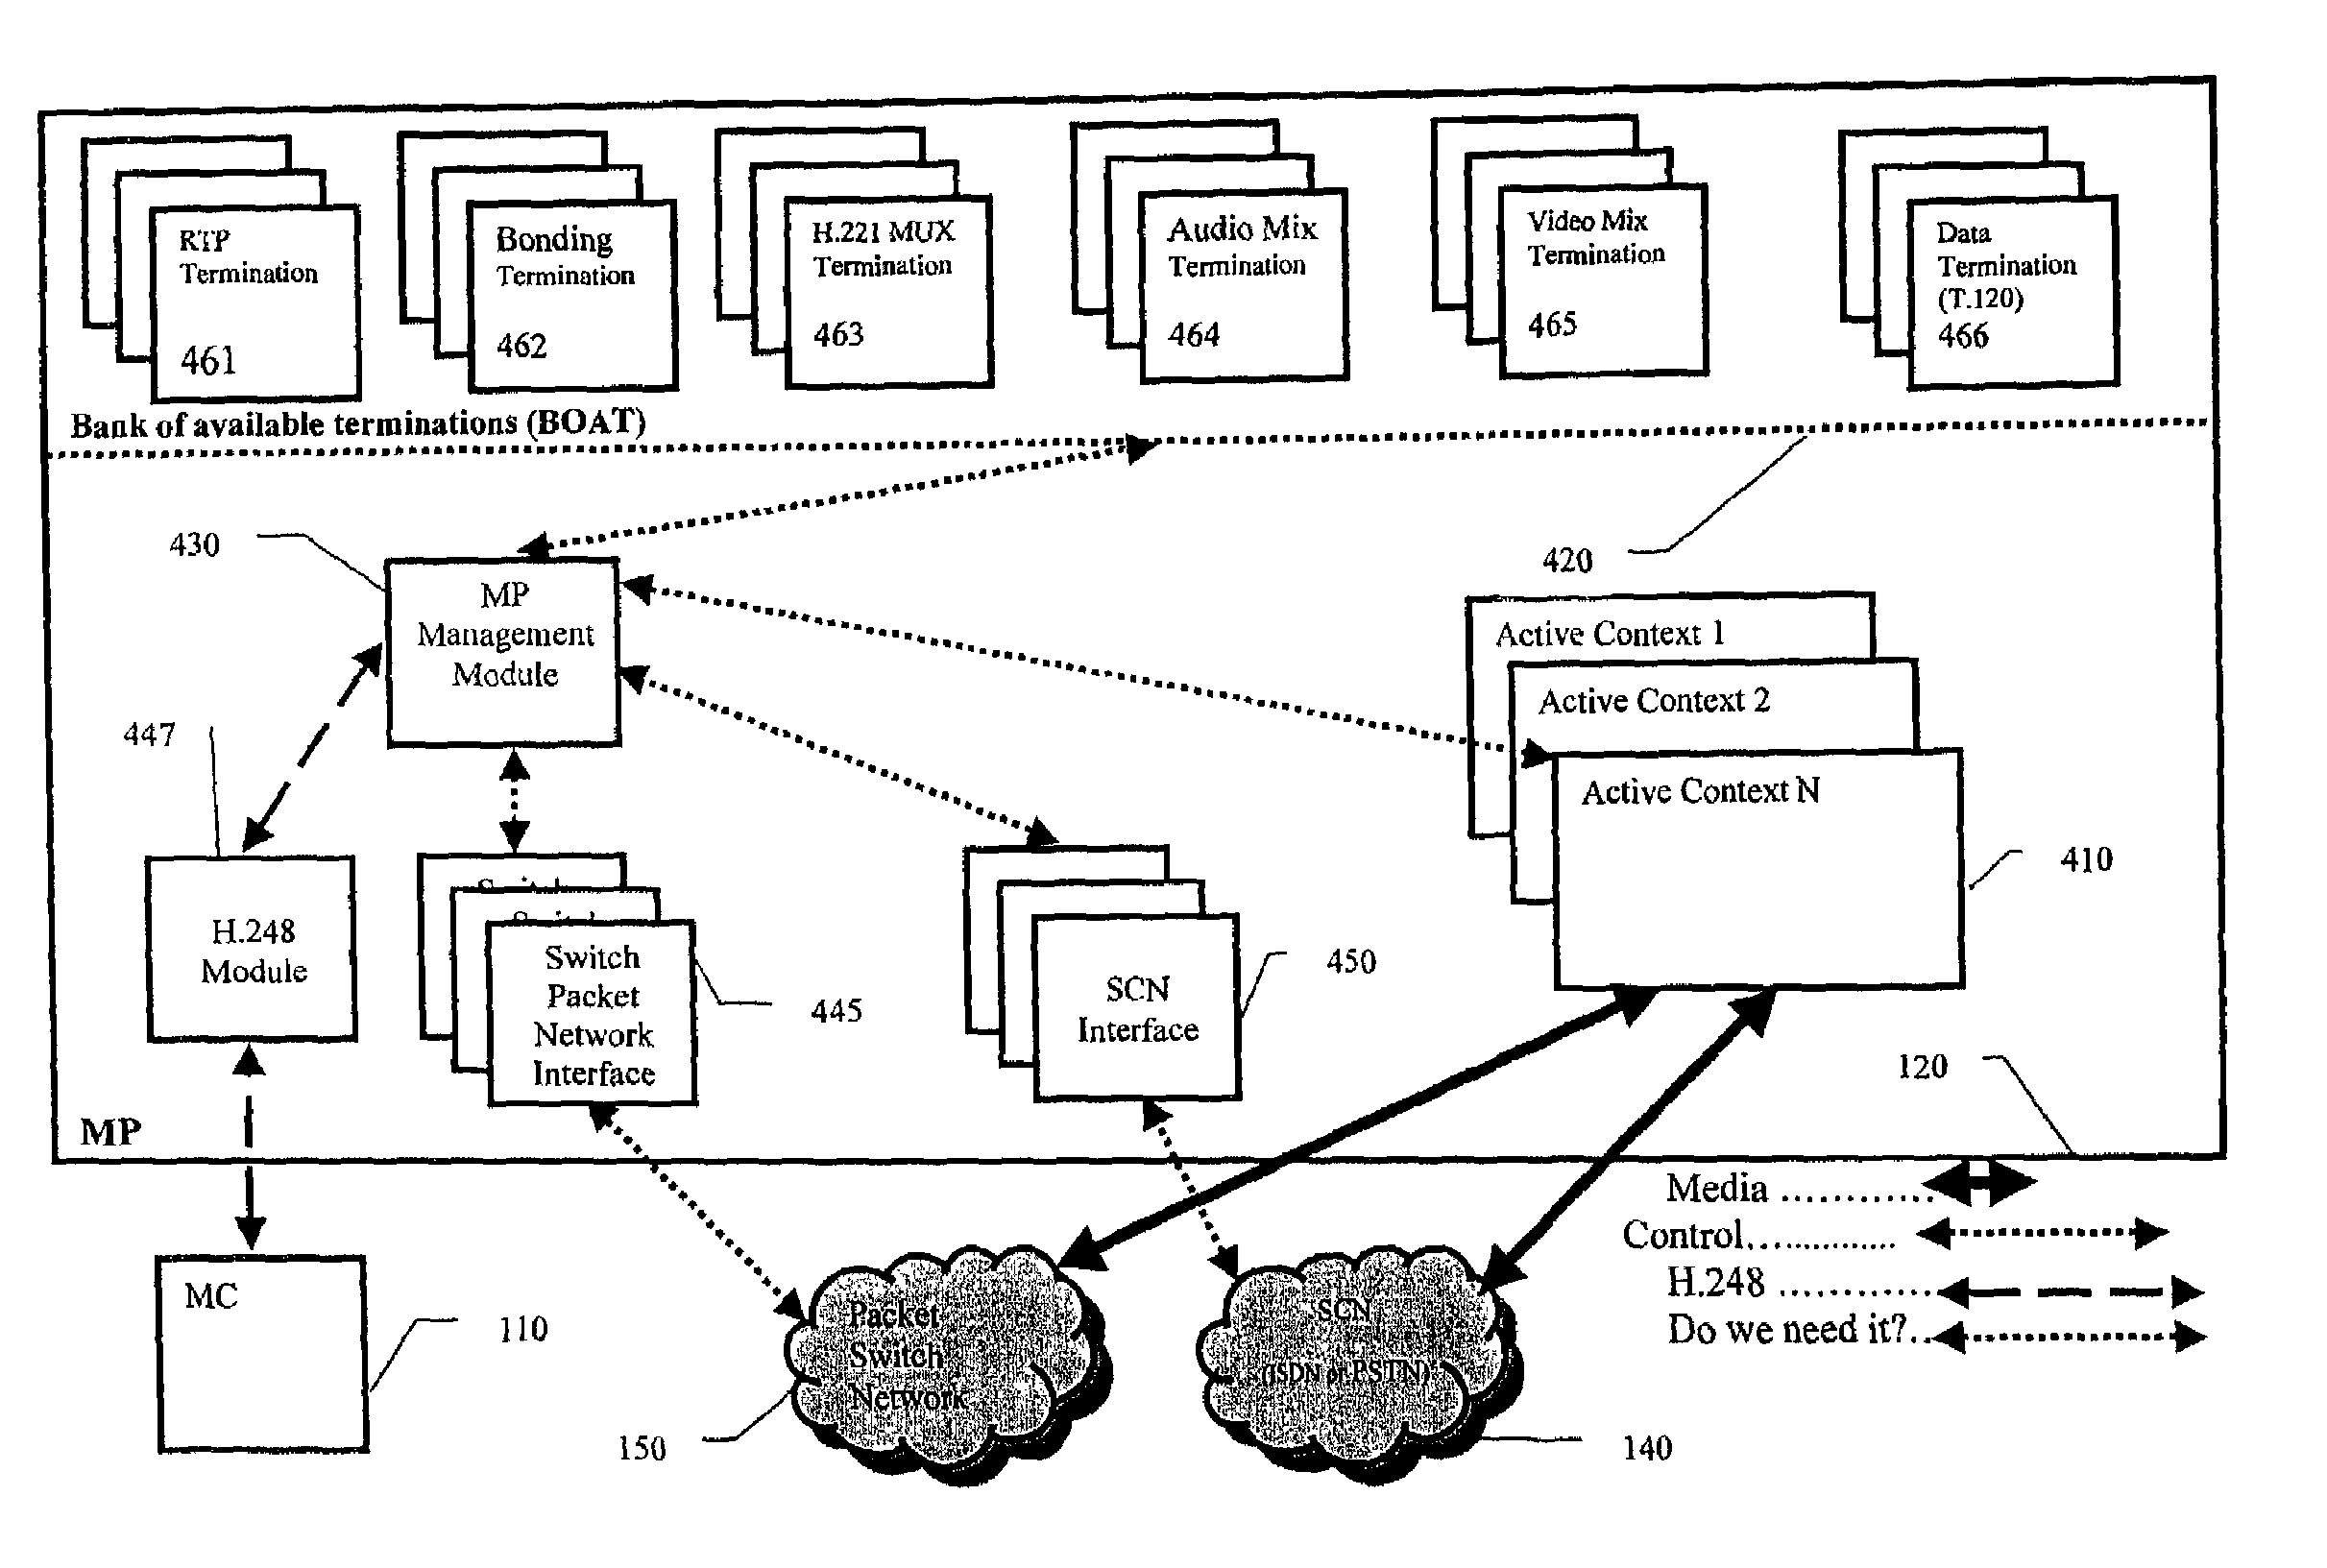 Decomposition architecture for an MCU